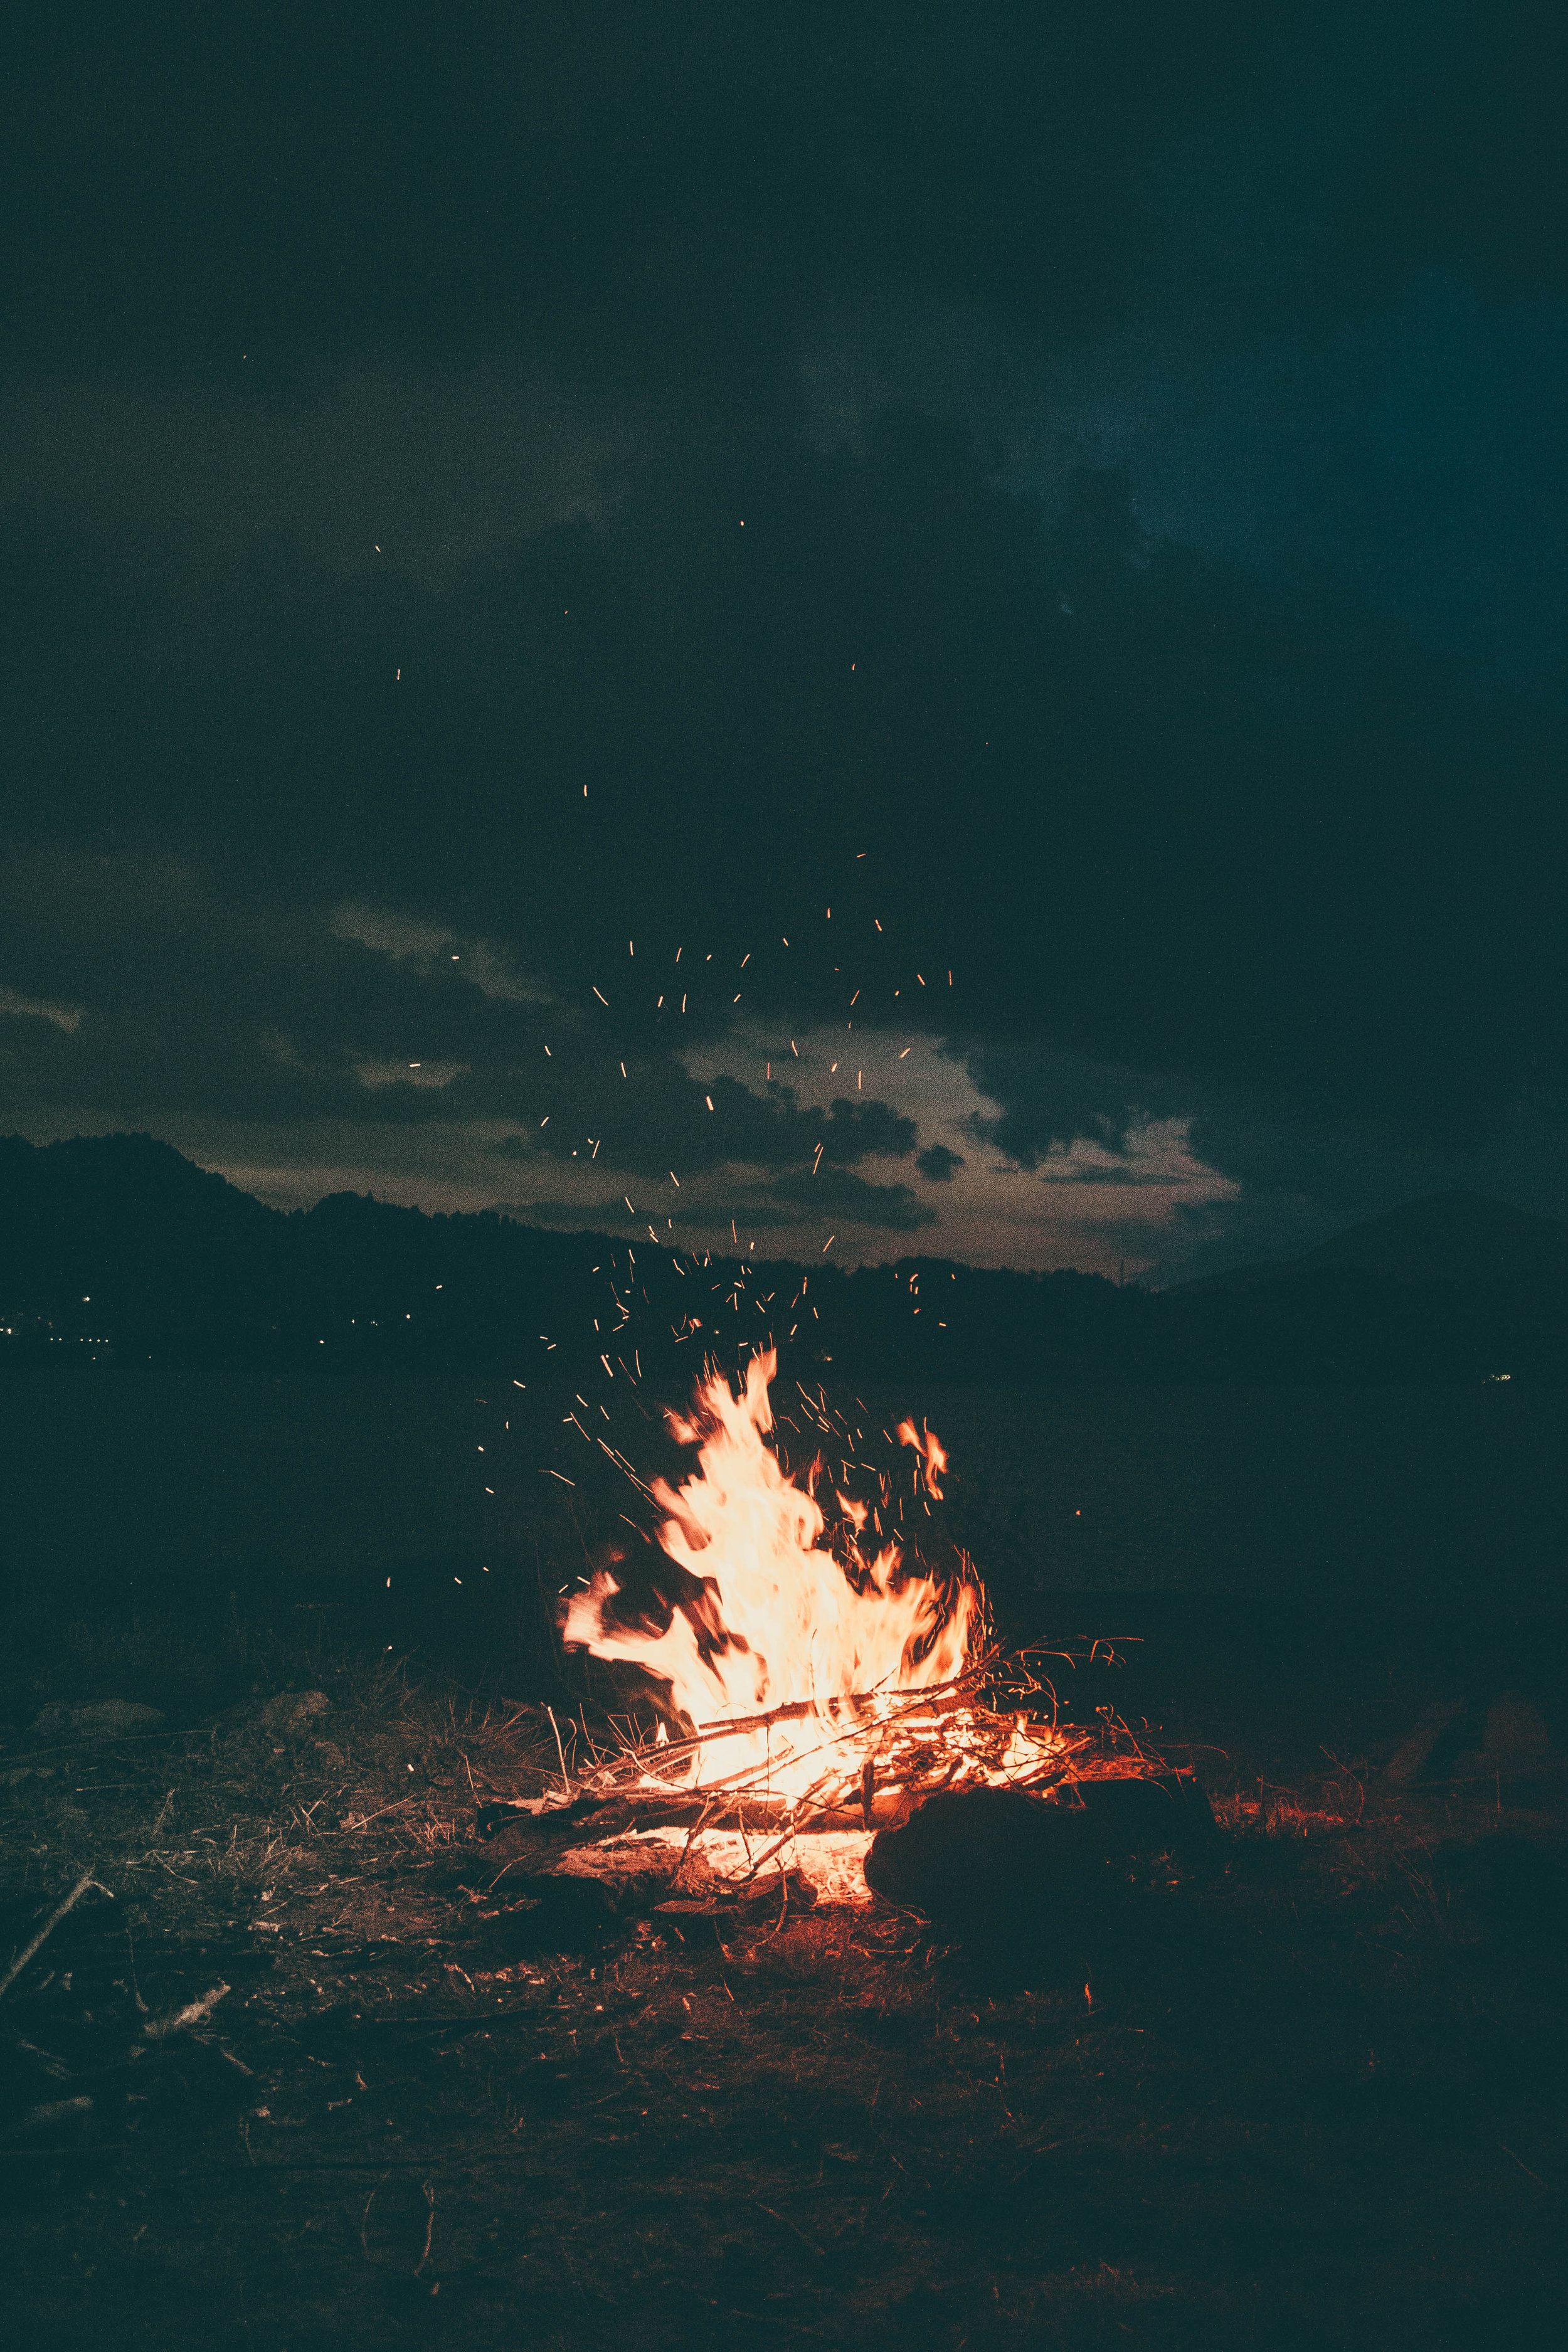 Canva - Lit Bonfire Outdoors during Nighttime.jpg